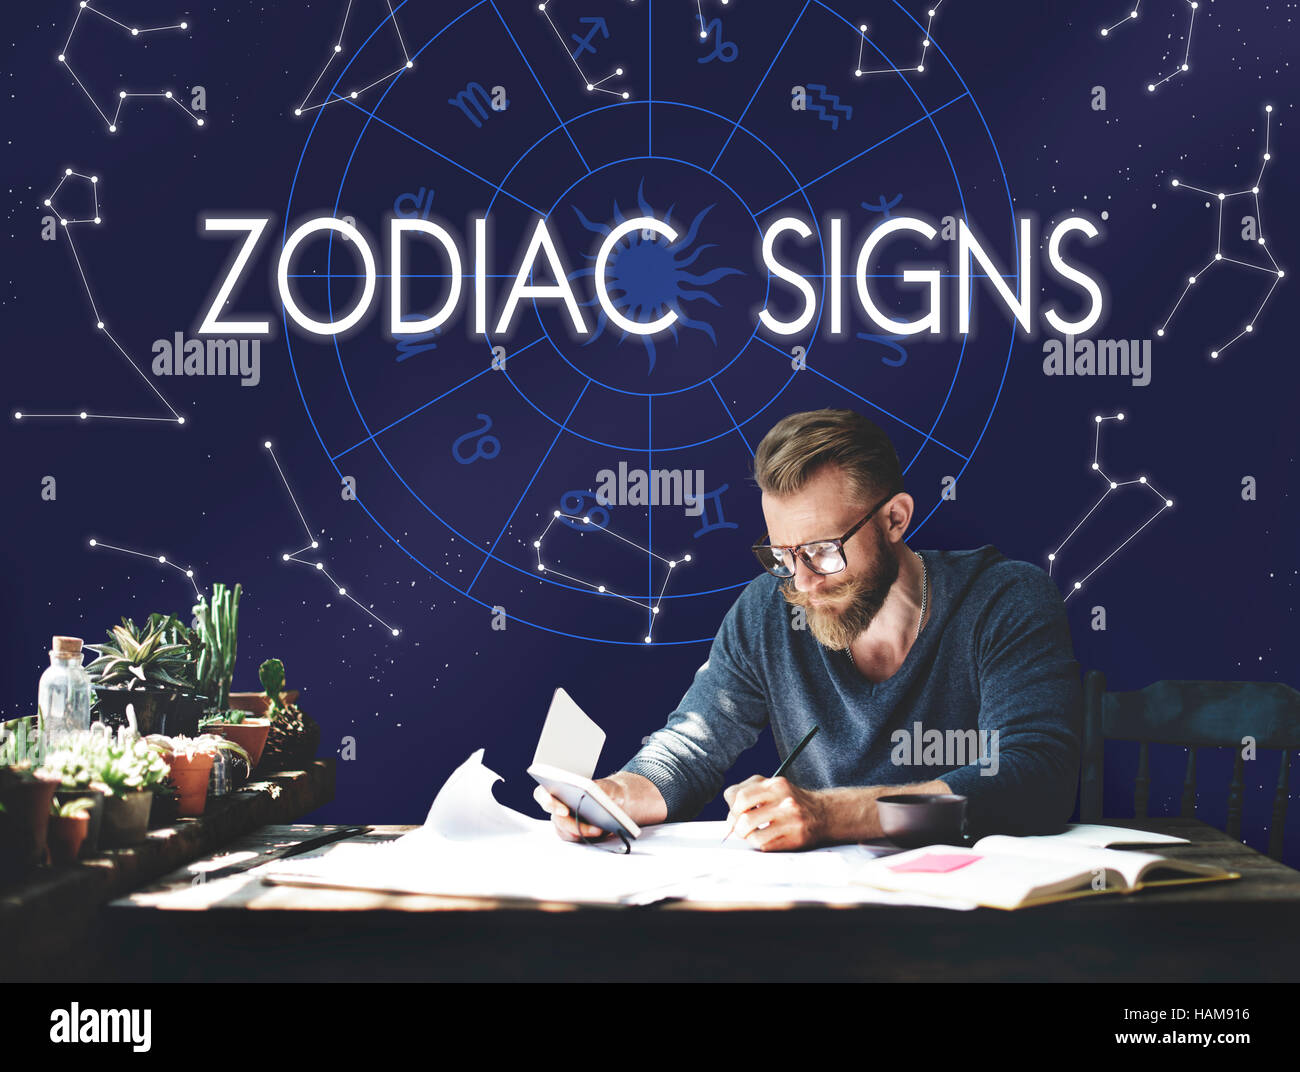 Zodiac Signs Astral Astrological Birth Calendar Concept Stock Photo